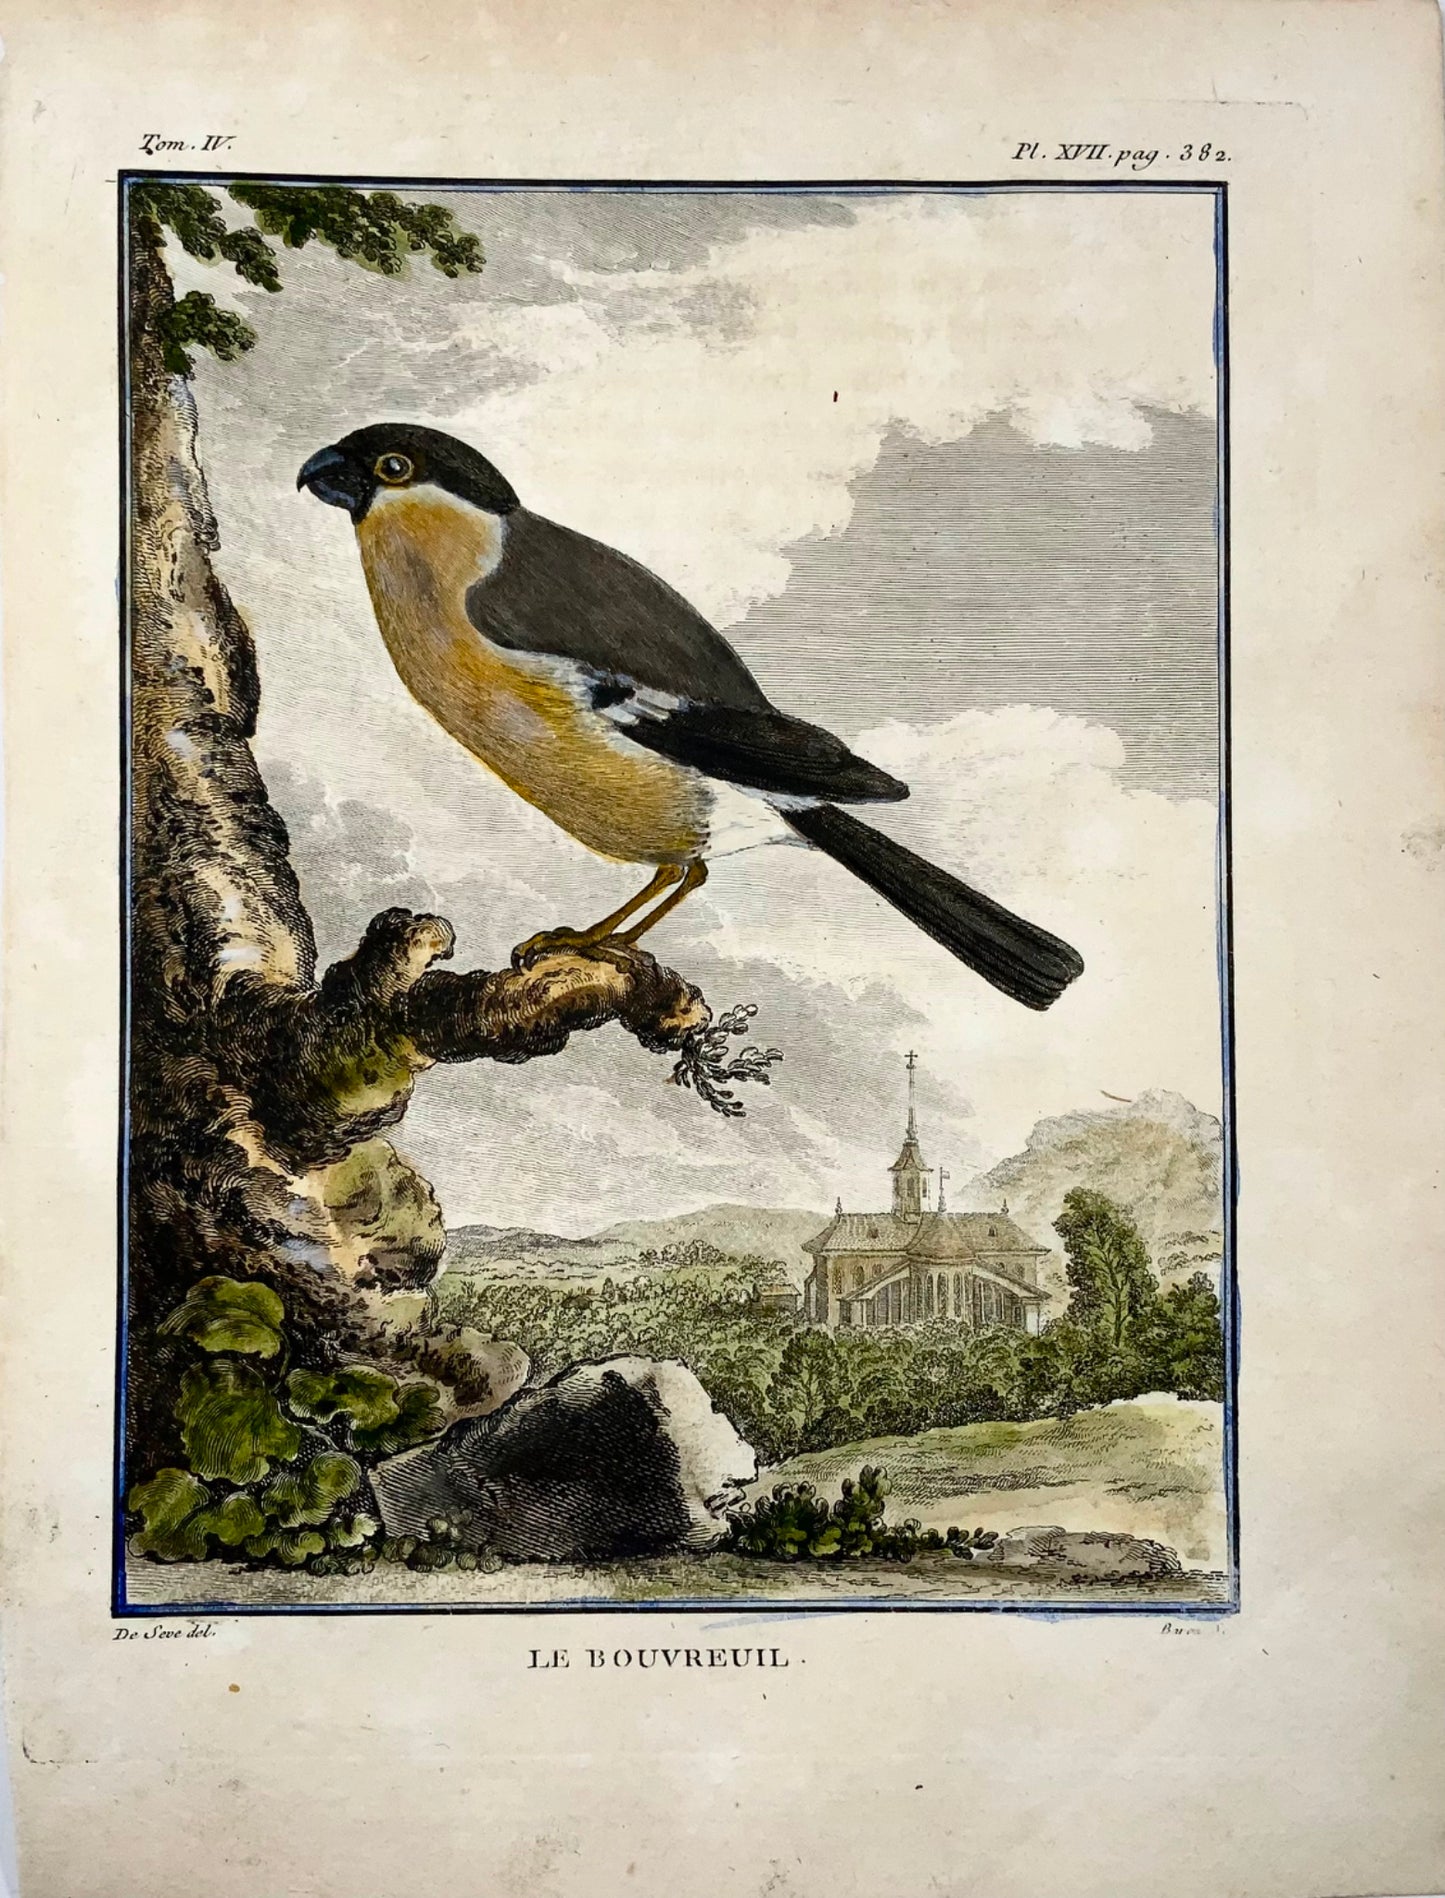 1771 Pyrrhula, Bullfinch, De Seve, ornithology, large quarto edition, engraving